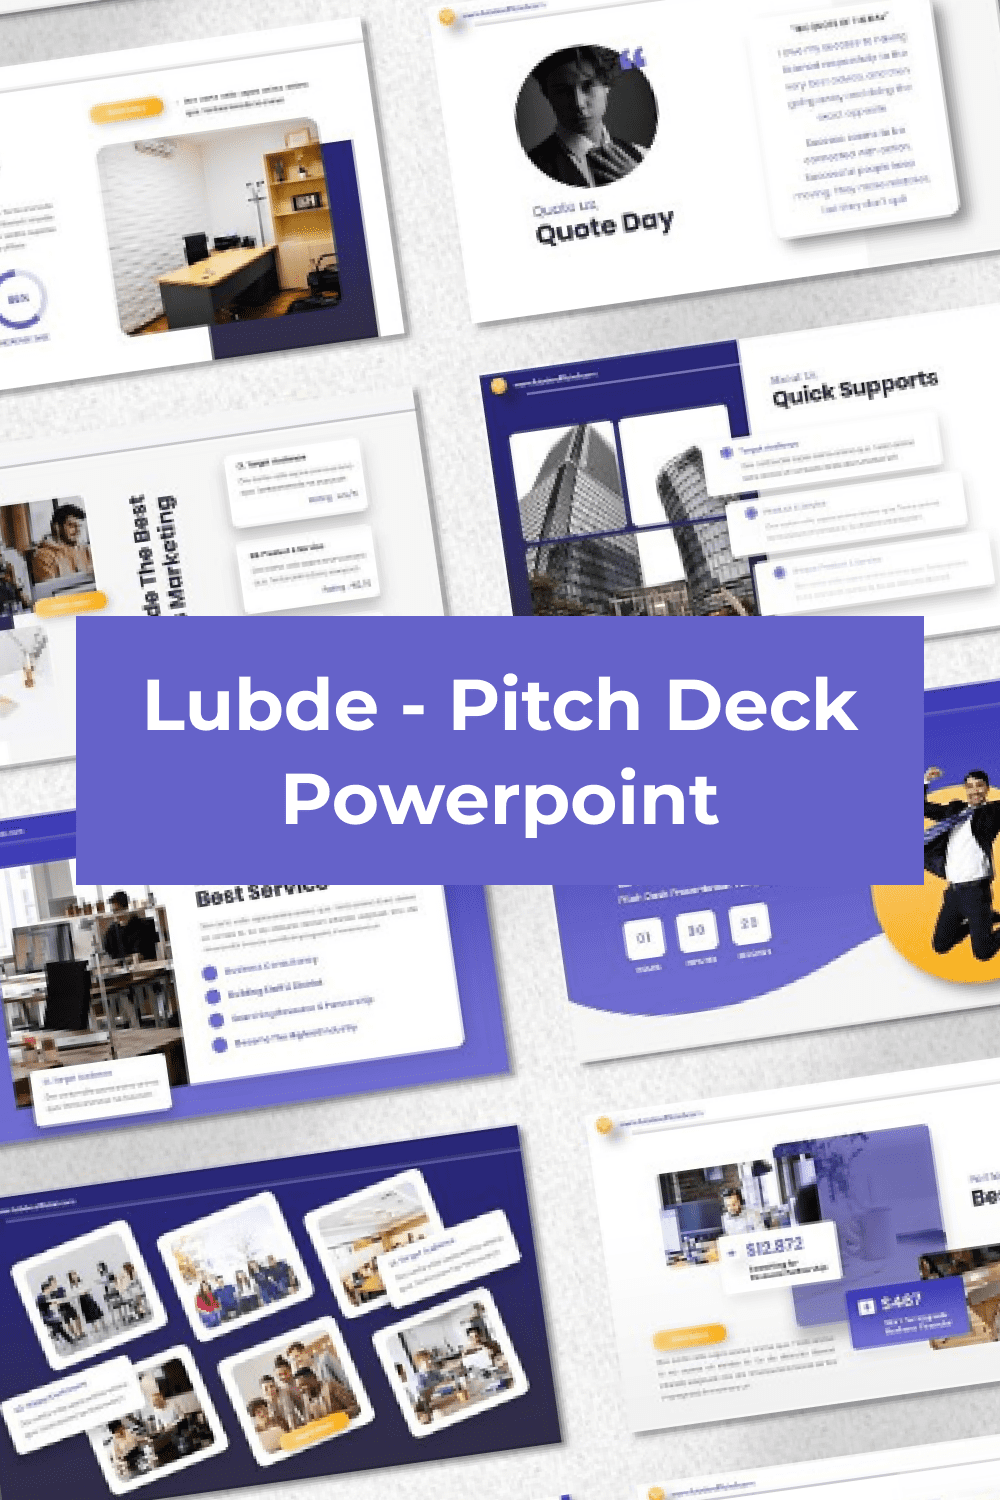 Lubde - Pitch Deck Powerpoint Pinterest.